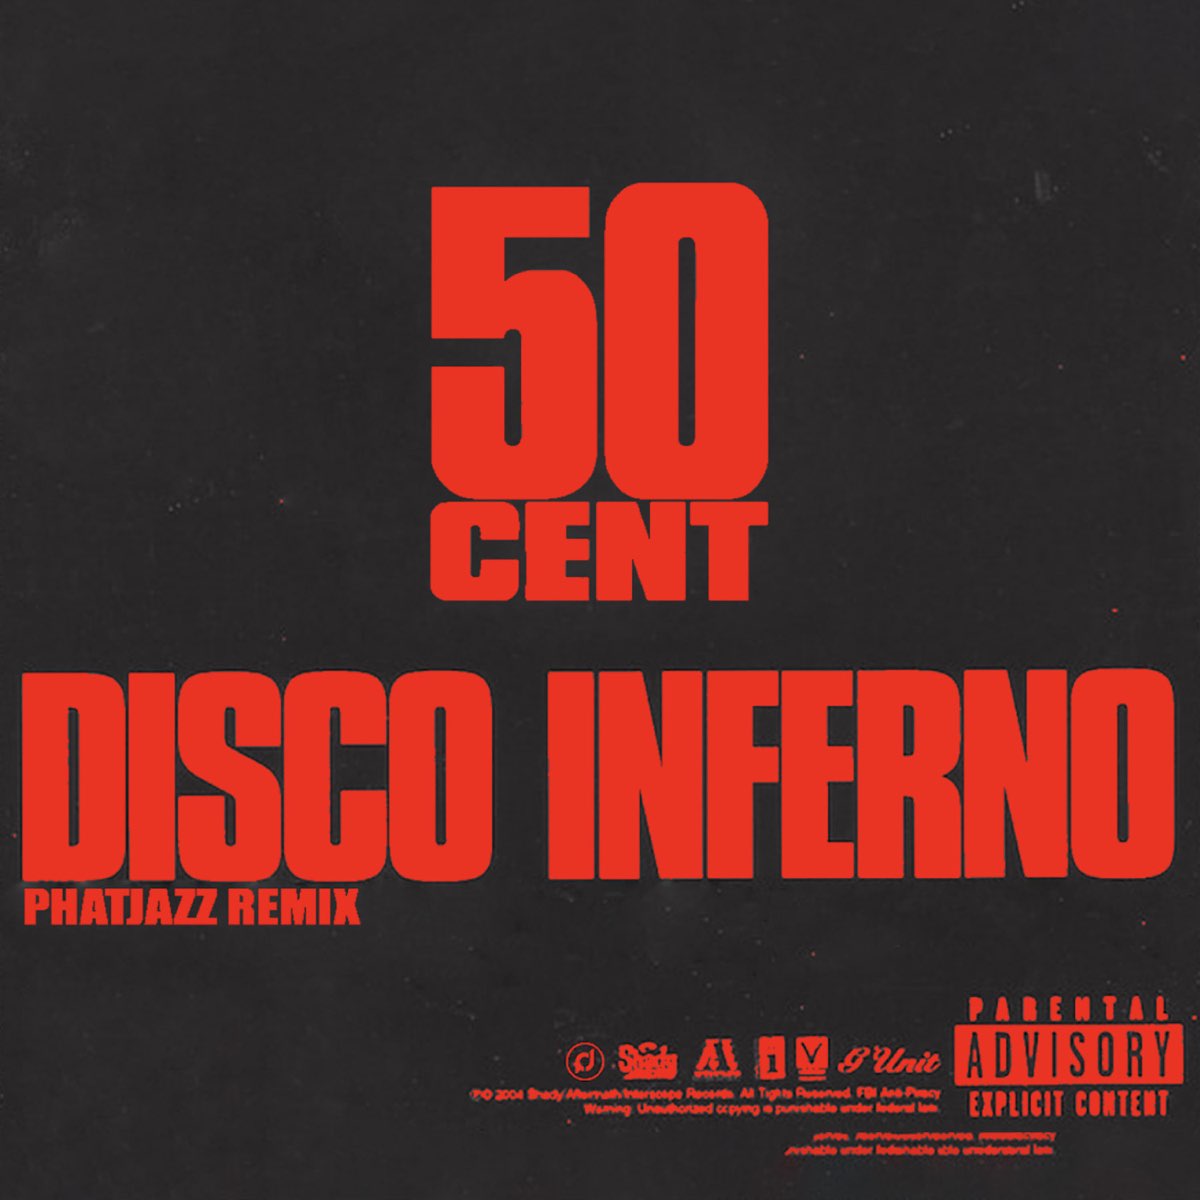 50 cent disco inferno remix